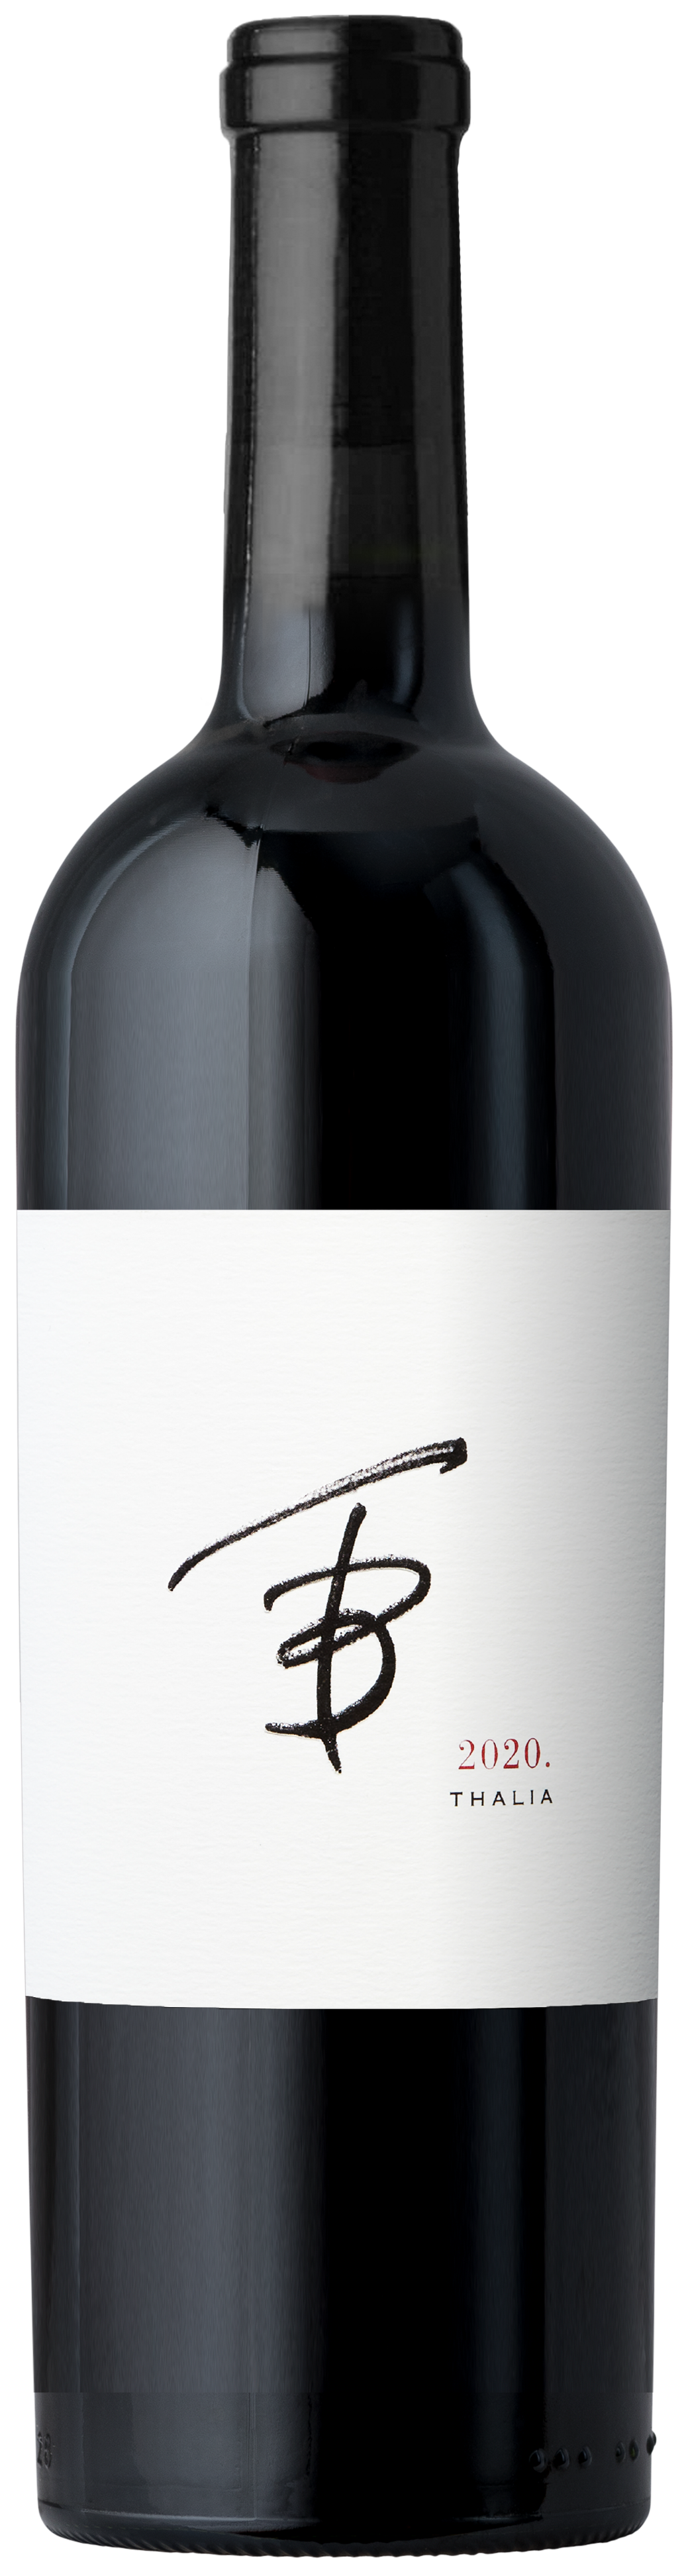 T. Berkley Wines "Thalia" Cabernet Franc 2020